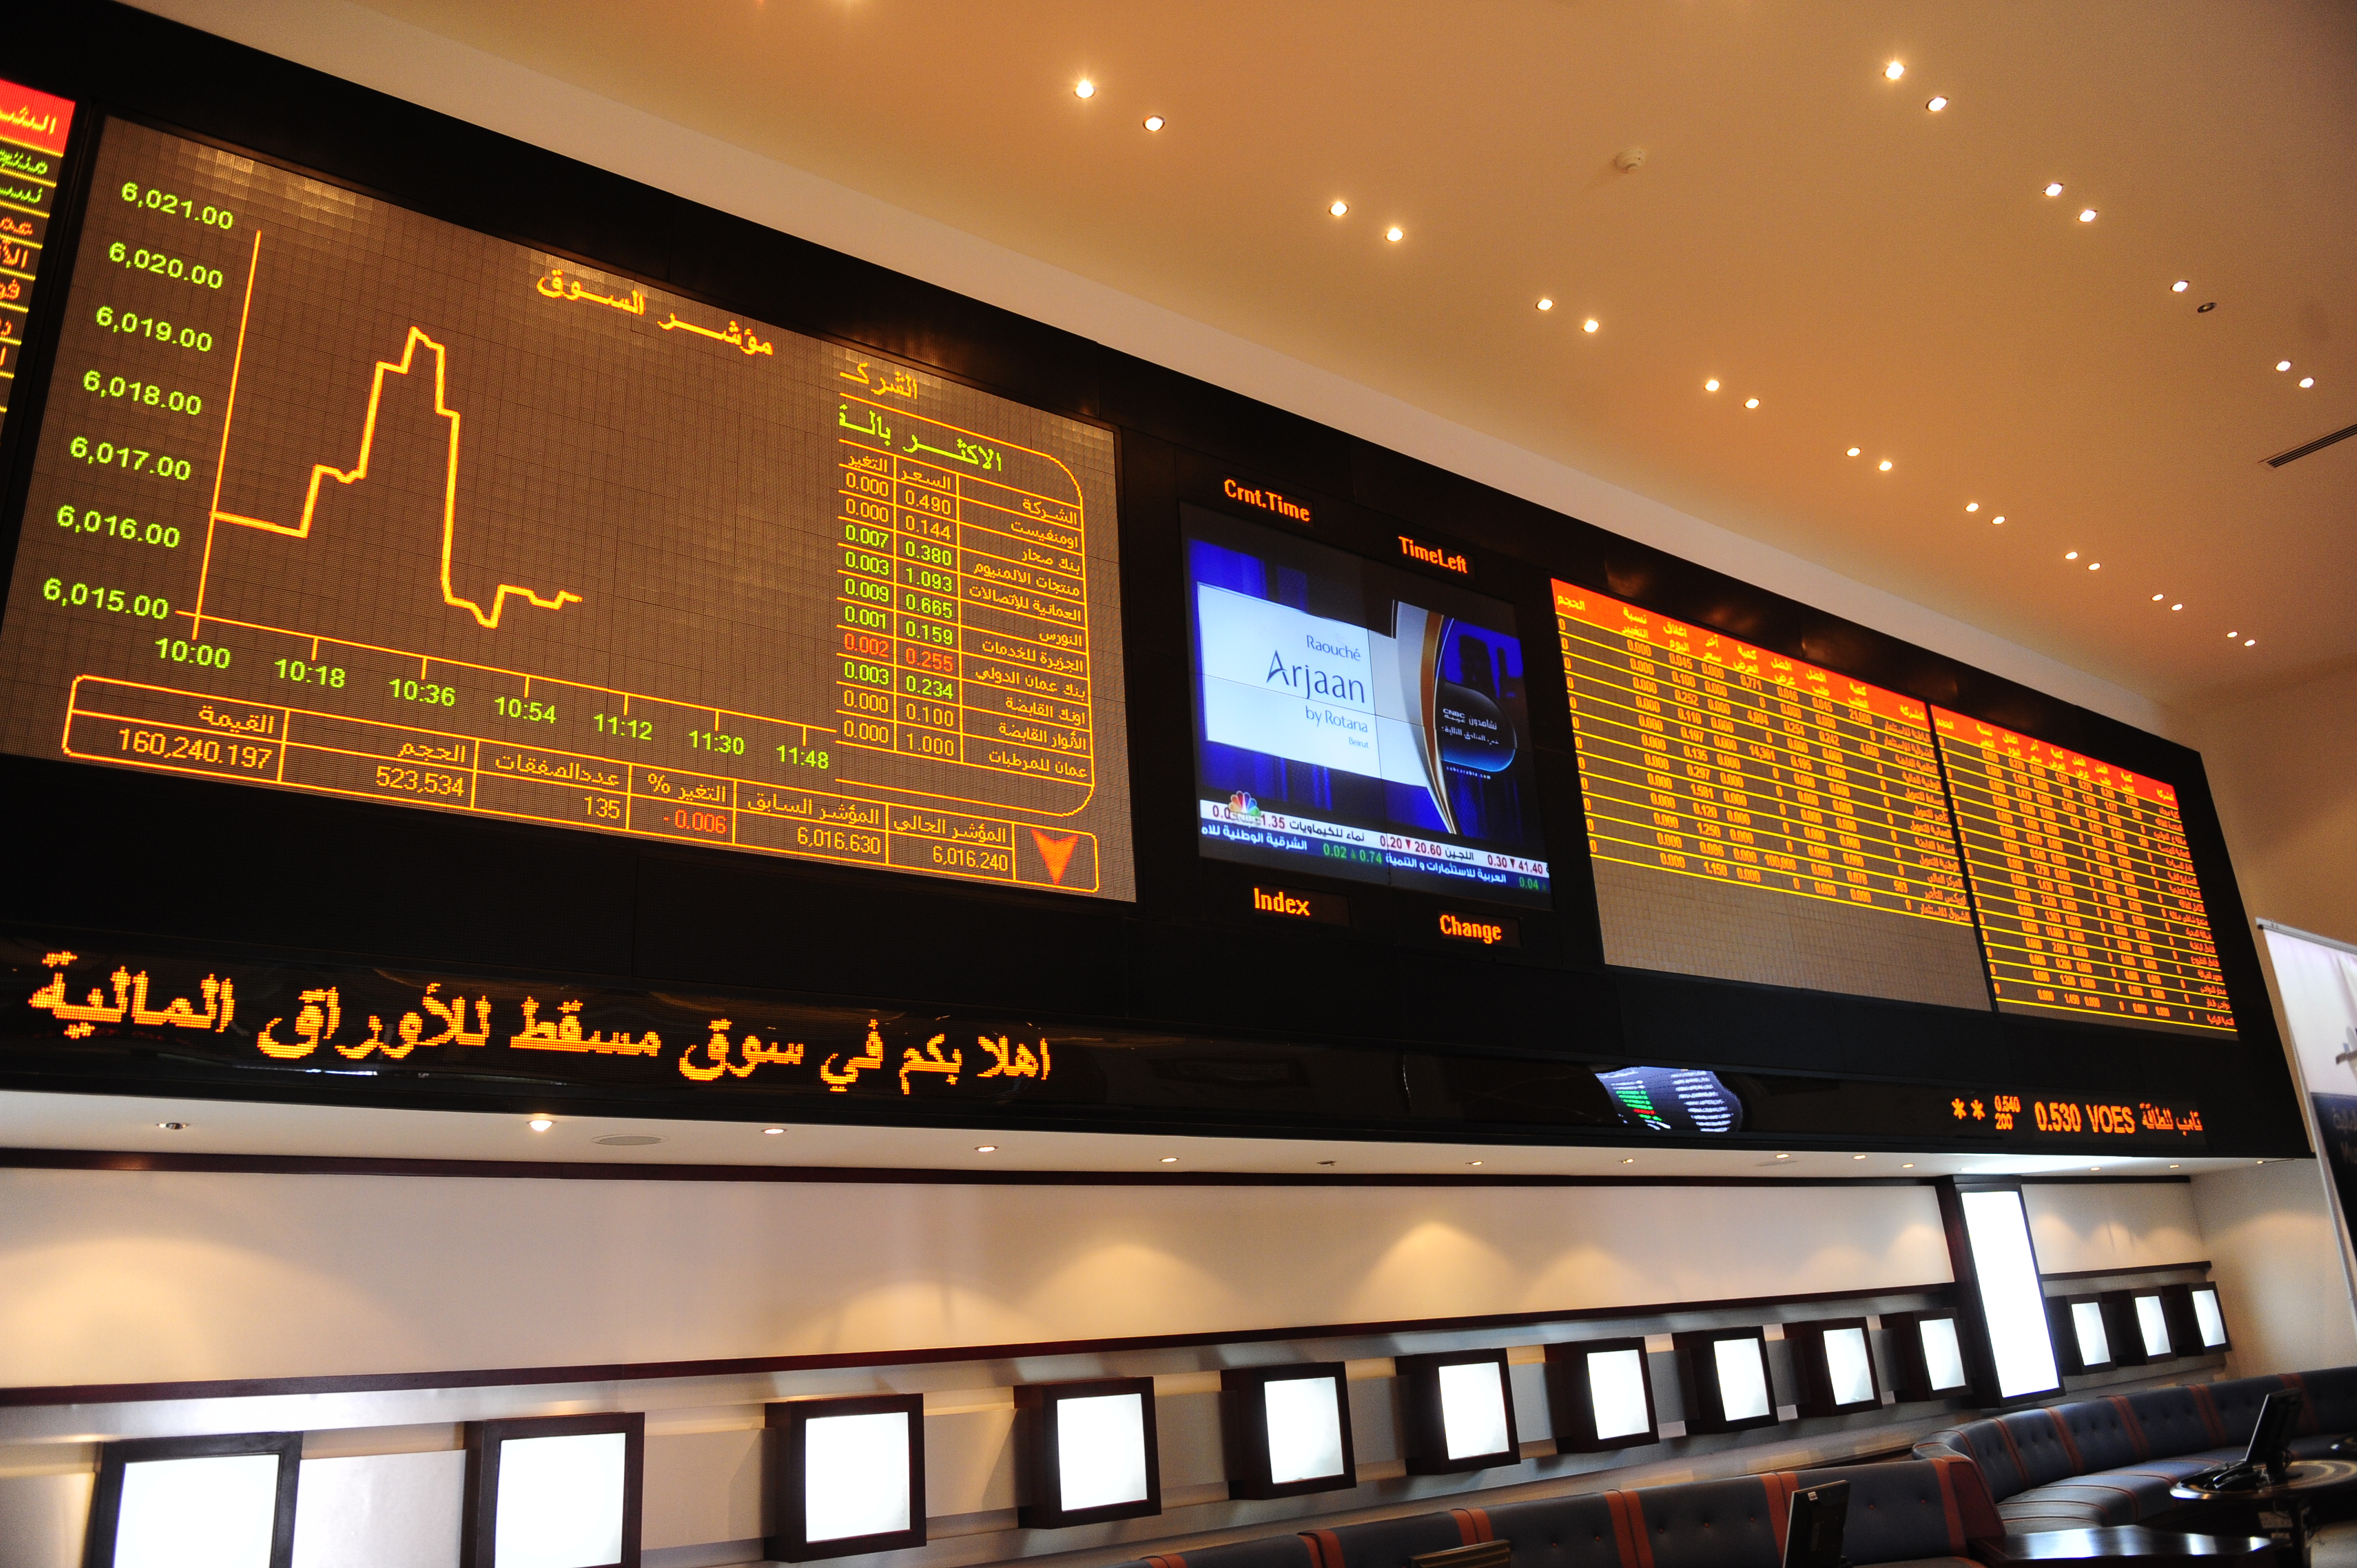 Selling pressure drags Oman index lower